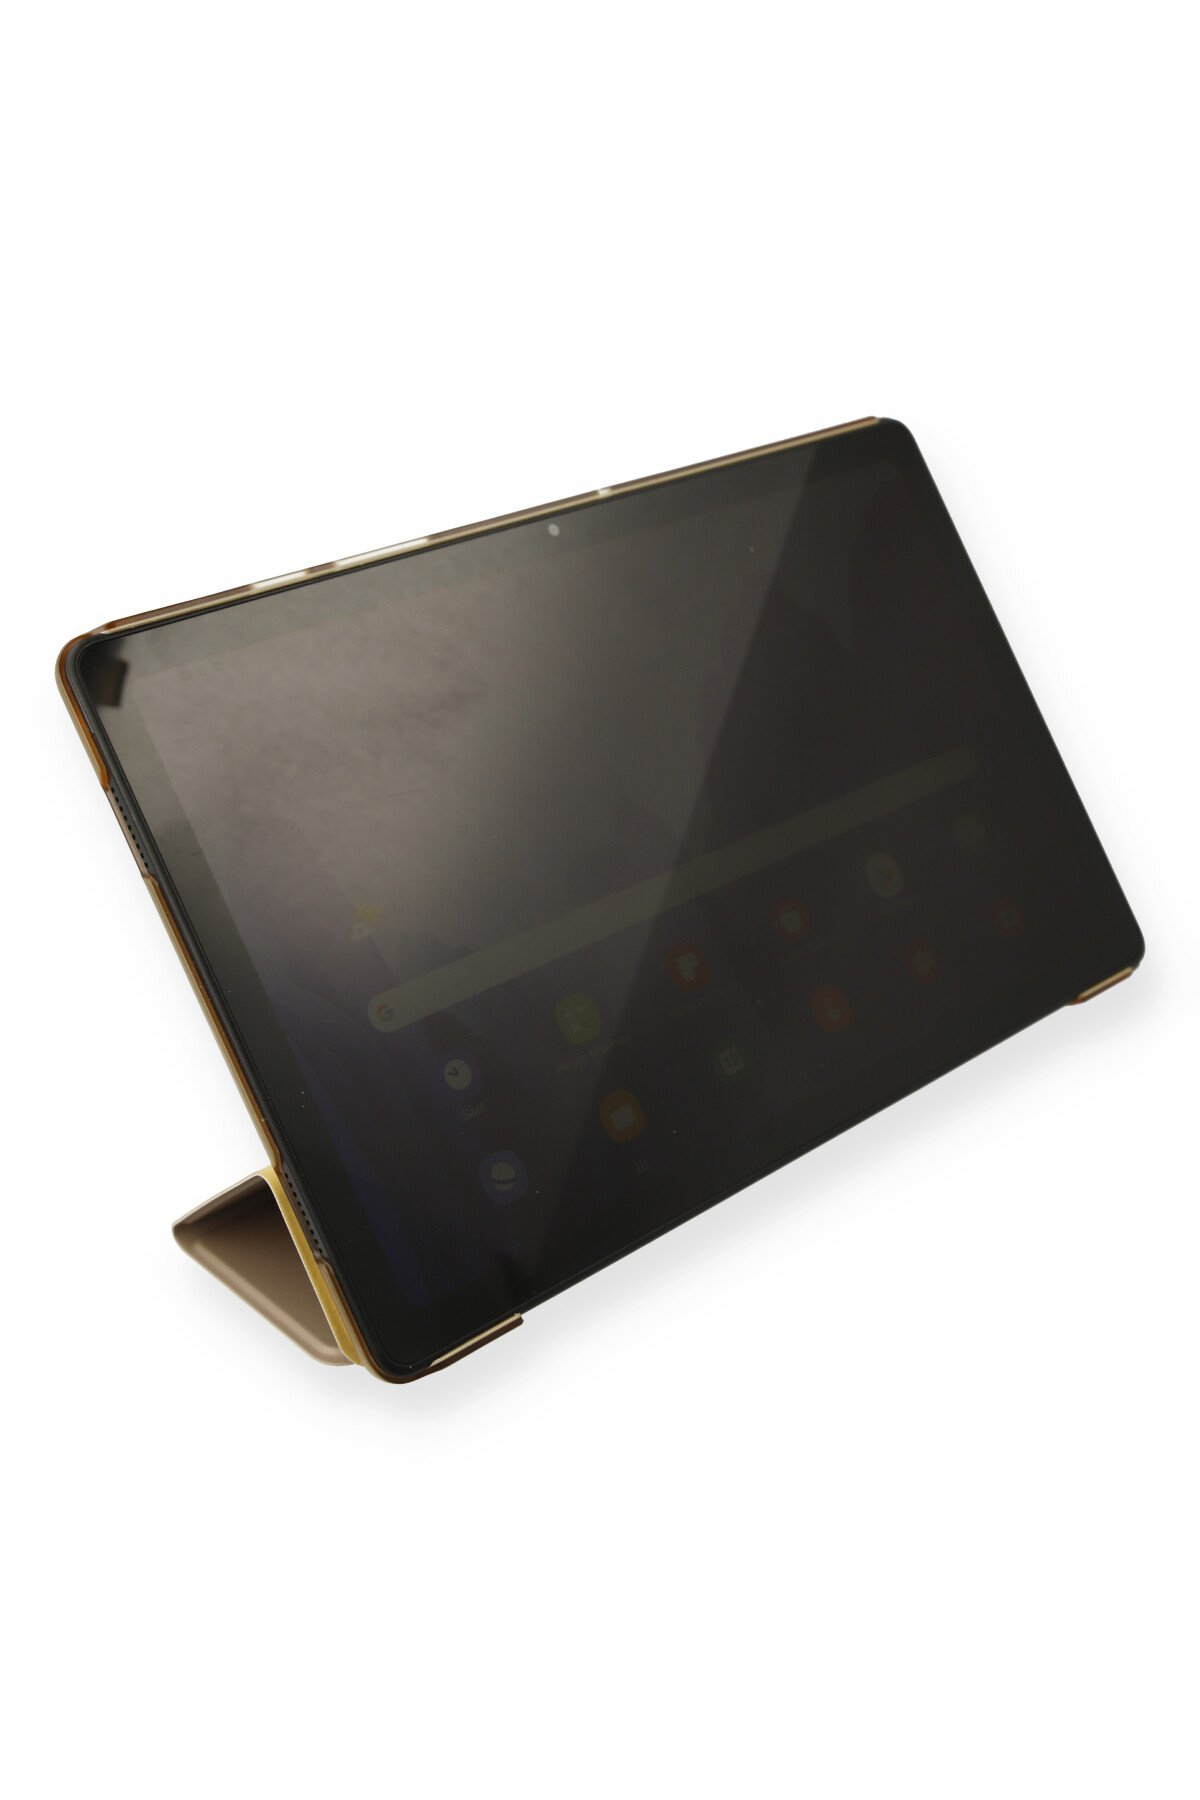 Newface iPad 4 9.7 Tablet Royal Nano